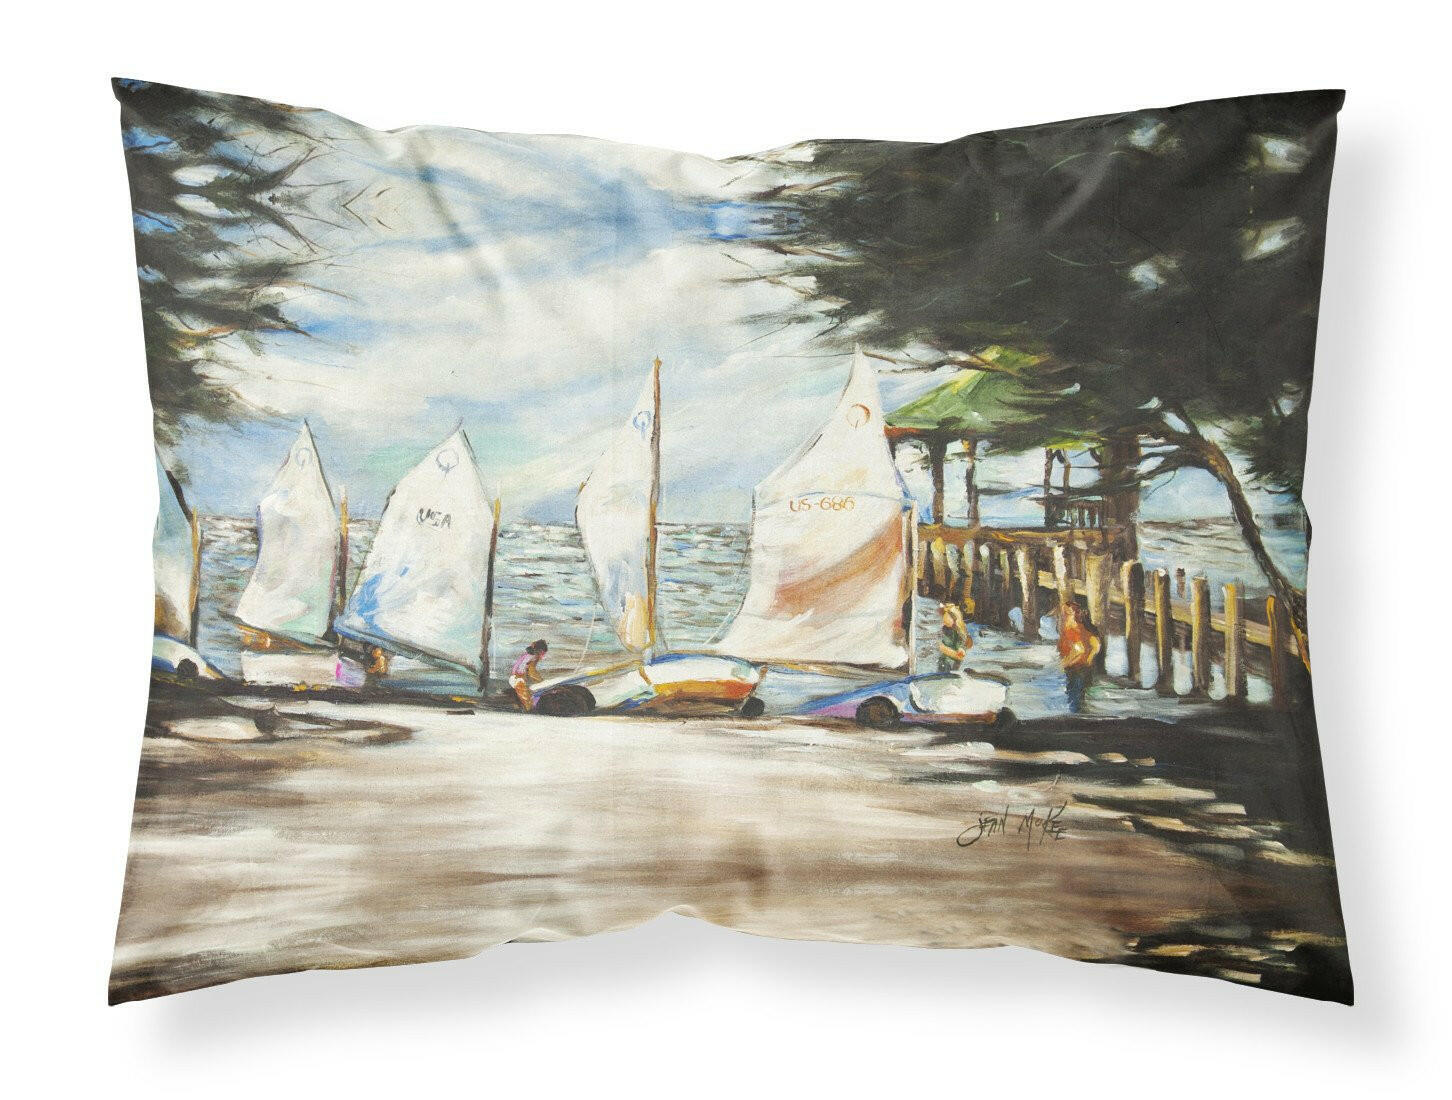 Sailing Lessons Sailboats Fabric Standard Pillowcase JMK1077PILLOWCASE by Caroline's Treasures